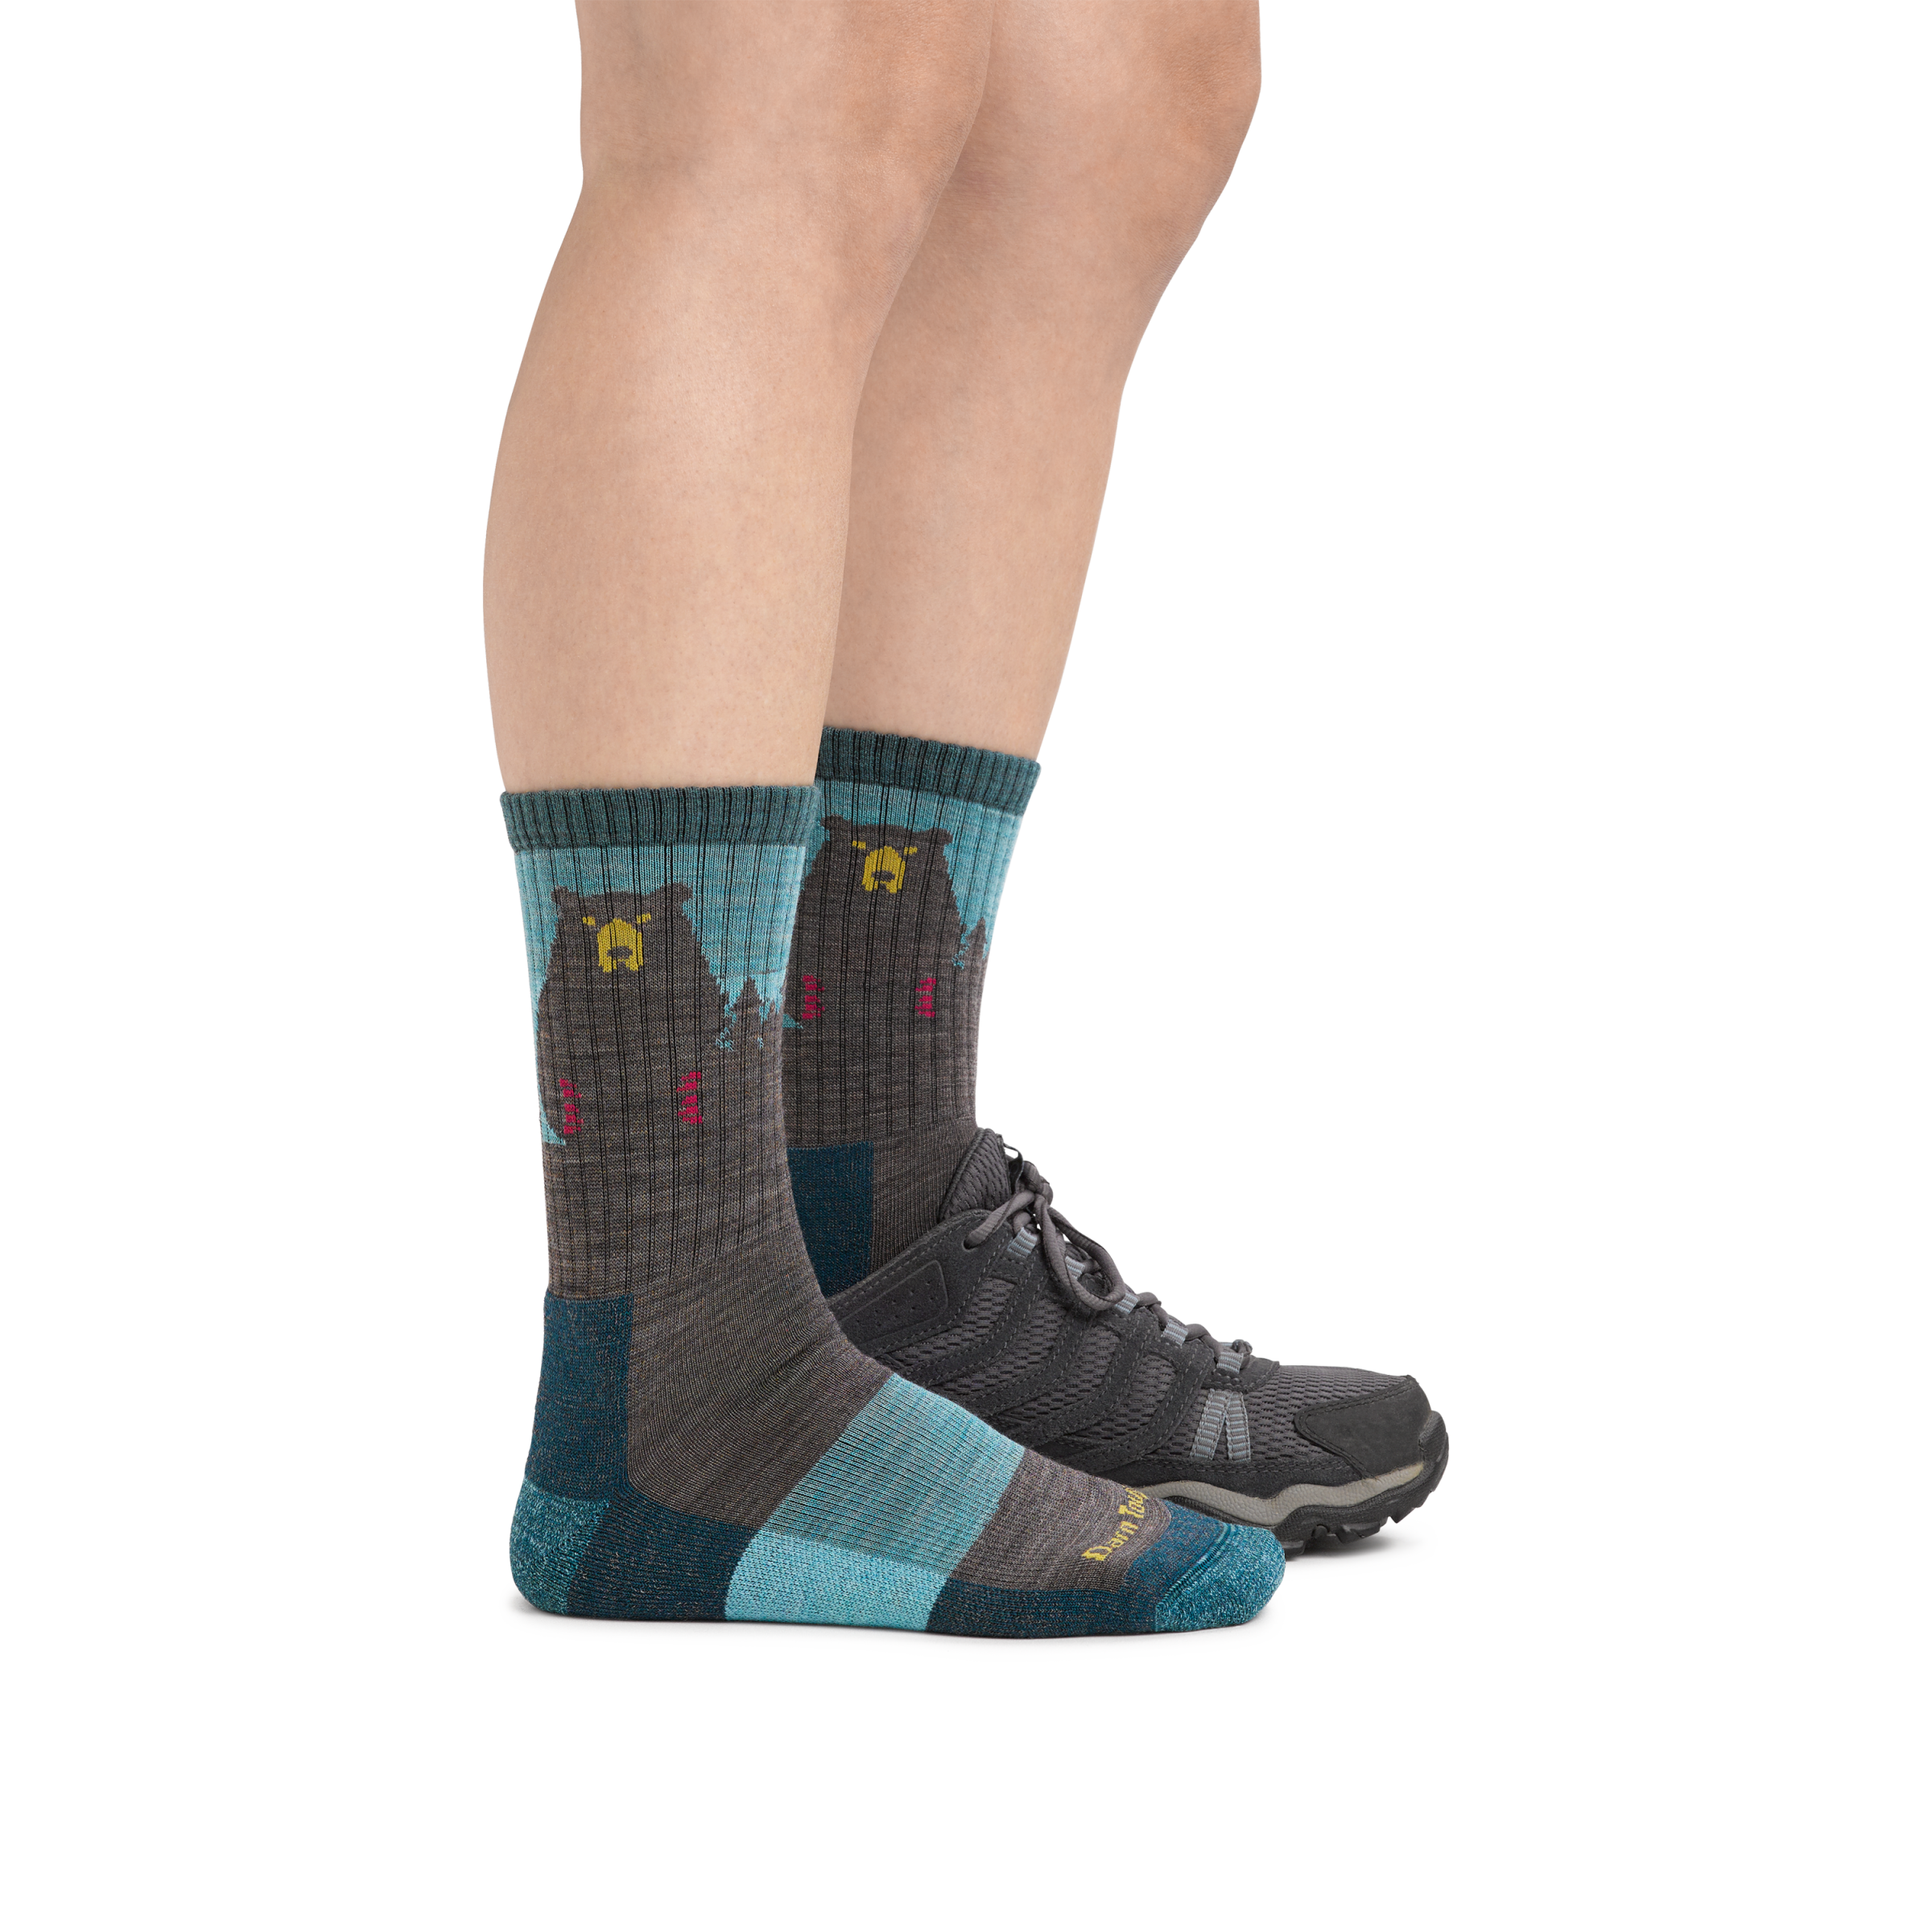 Woman wearing Women's Bear Town Micro Crew Lightweight Hiking Socks in Aqua with back foot also in a hiking shoe